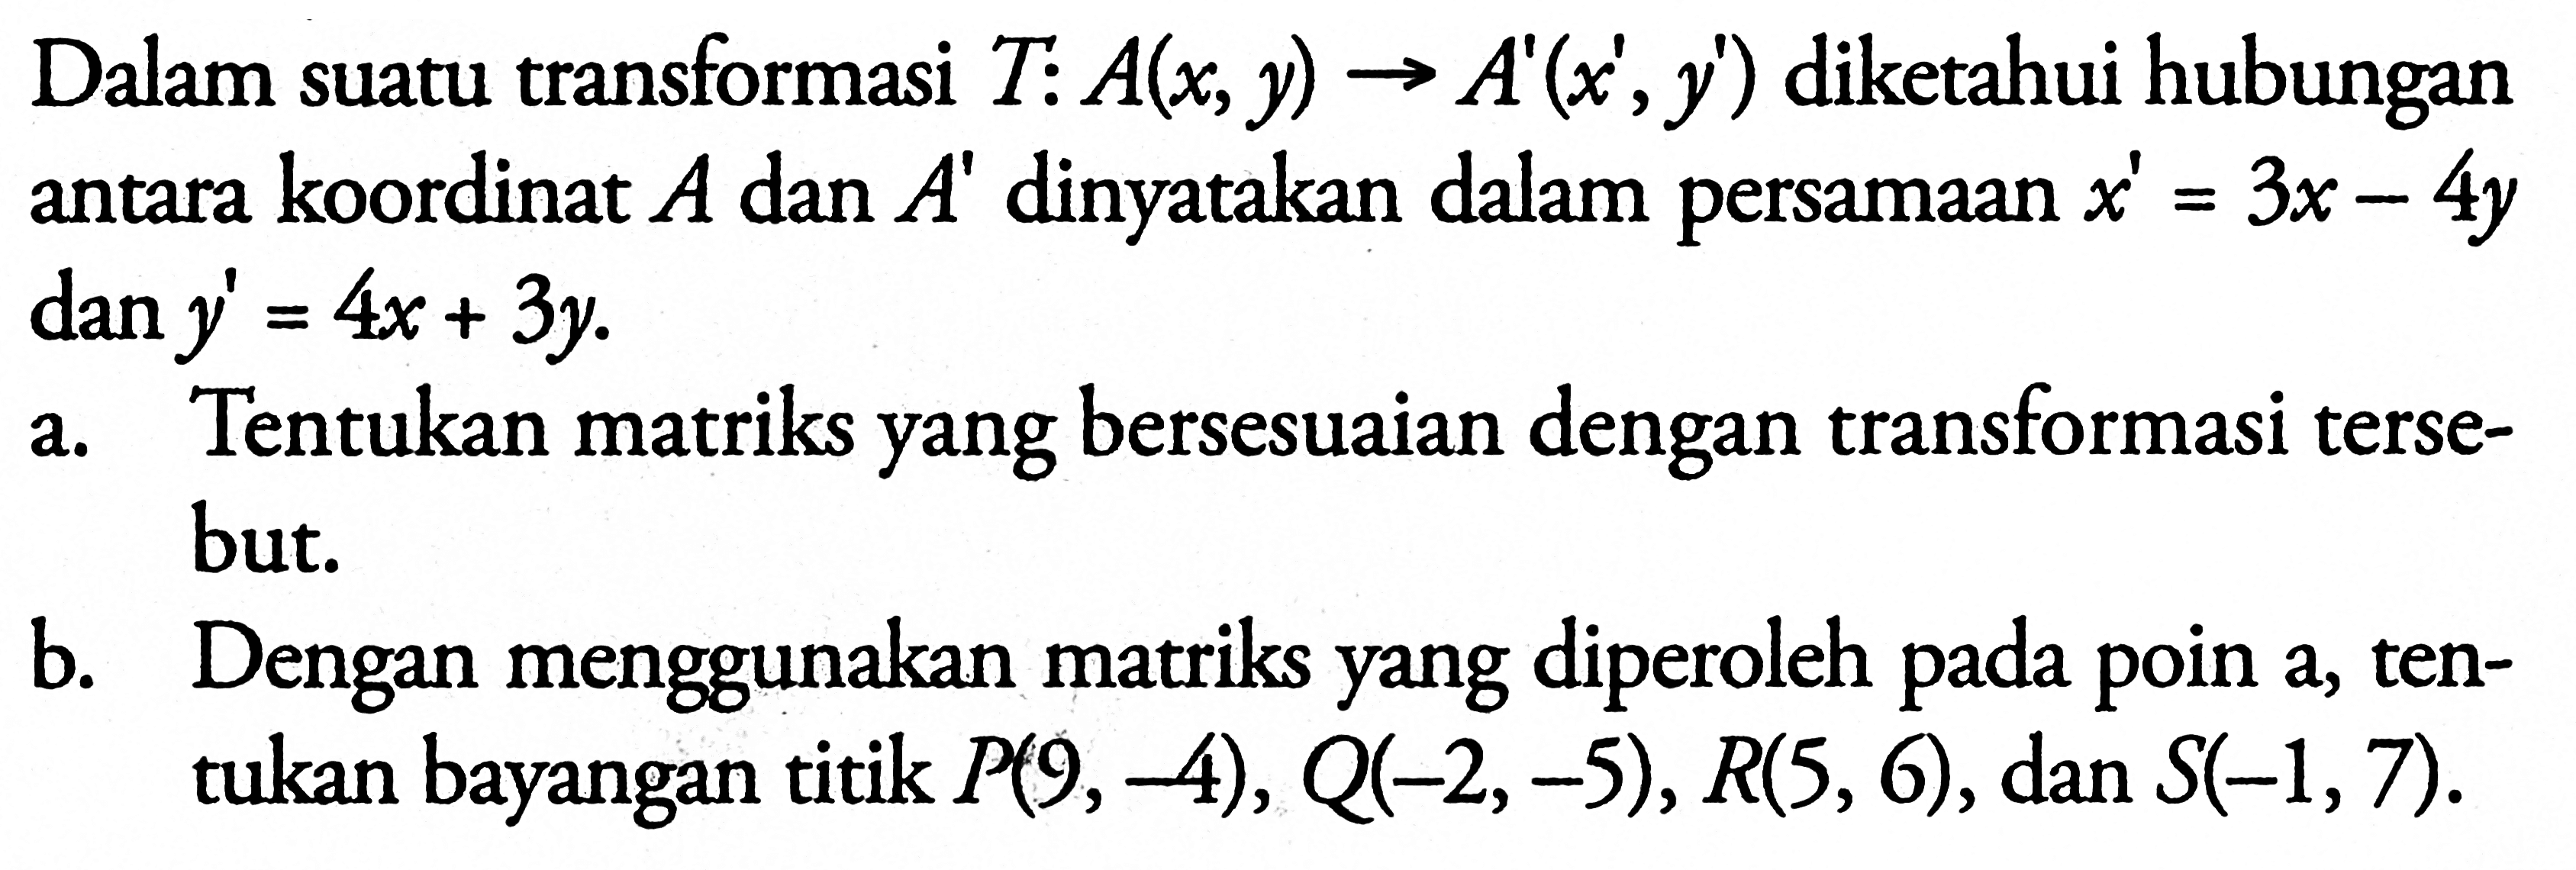 Dalam suatu transformasi T:A(x,y)->A'(x',y') diketahui hubungan antara koordinat A dan A' dinyatakan dalam persamaan x'=3x-4y dan y'=4x+3y. a. Tentukan matriks yang bersesuaian dengan transformasi tersebut. b. Dengan menggunakan matriks yang diperoleh pada poin a, tentukan bayangan titik P(9,-4), Q(-2,-5), R(5,6), dan S(-1,7)